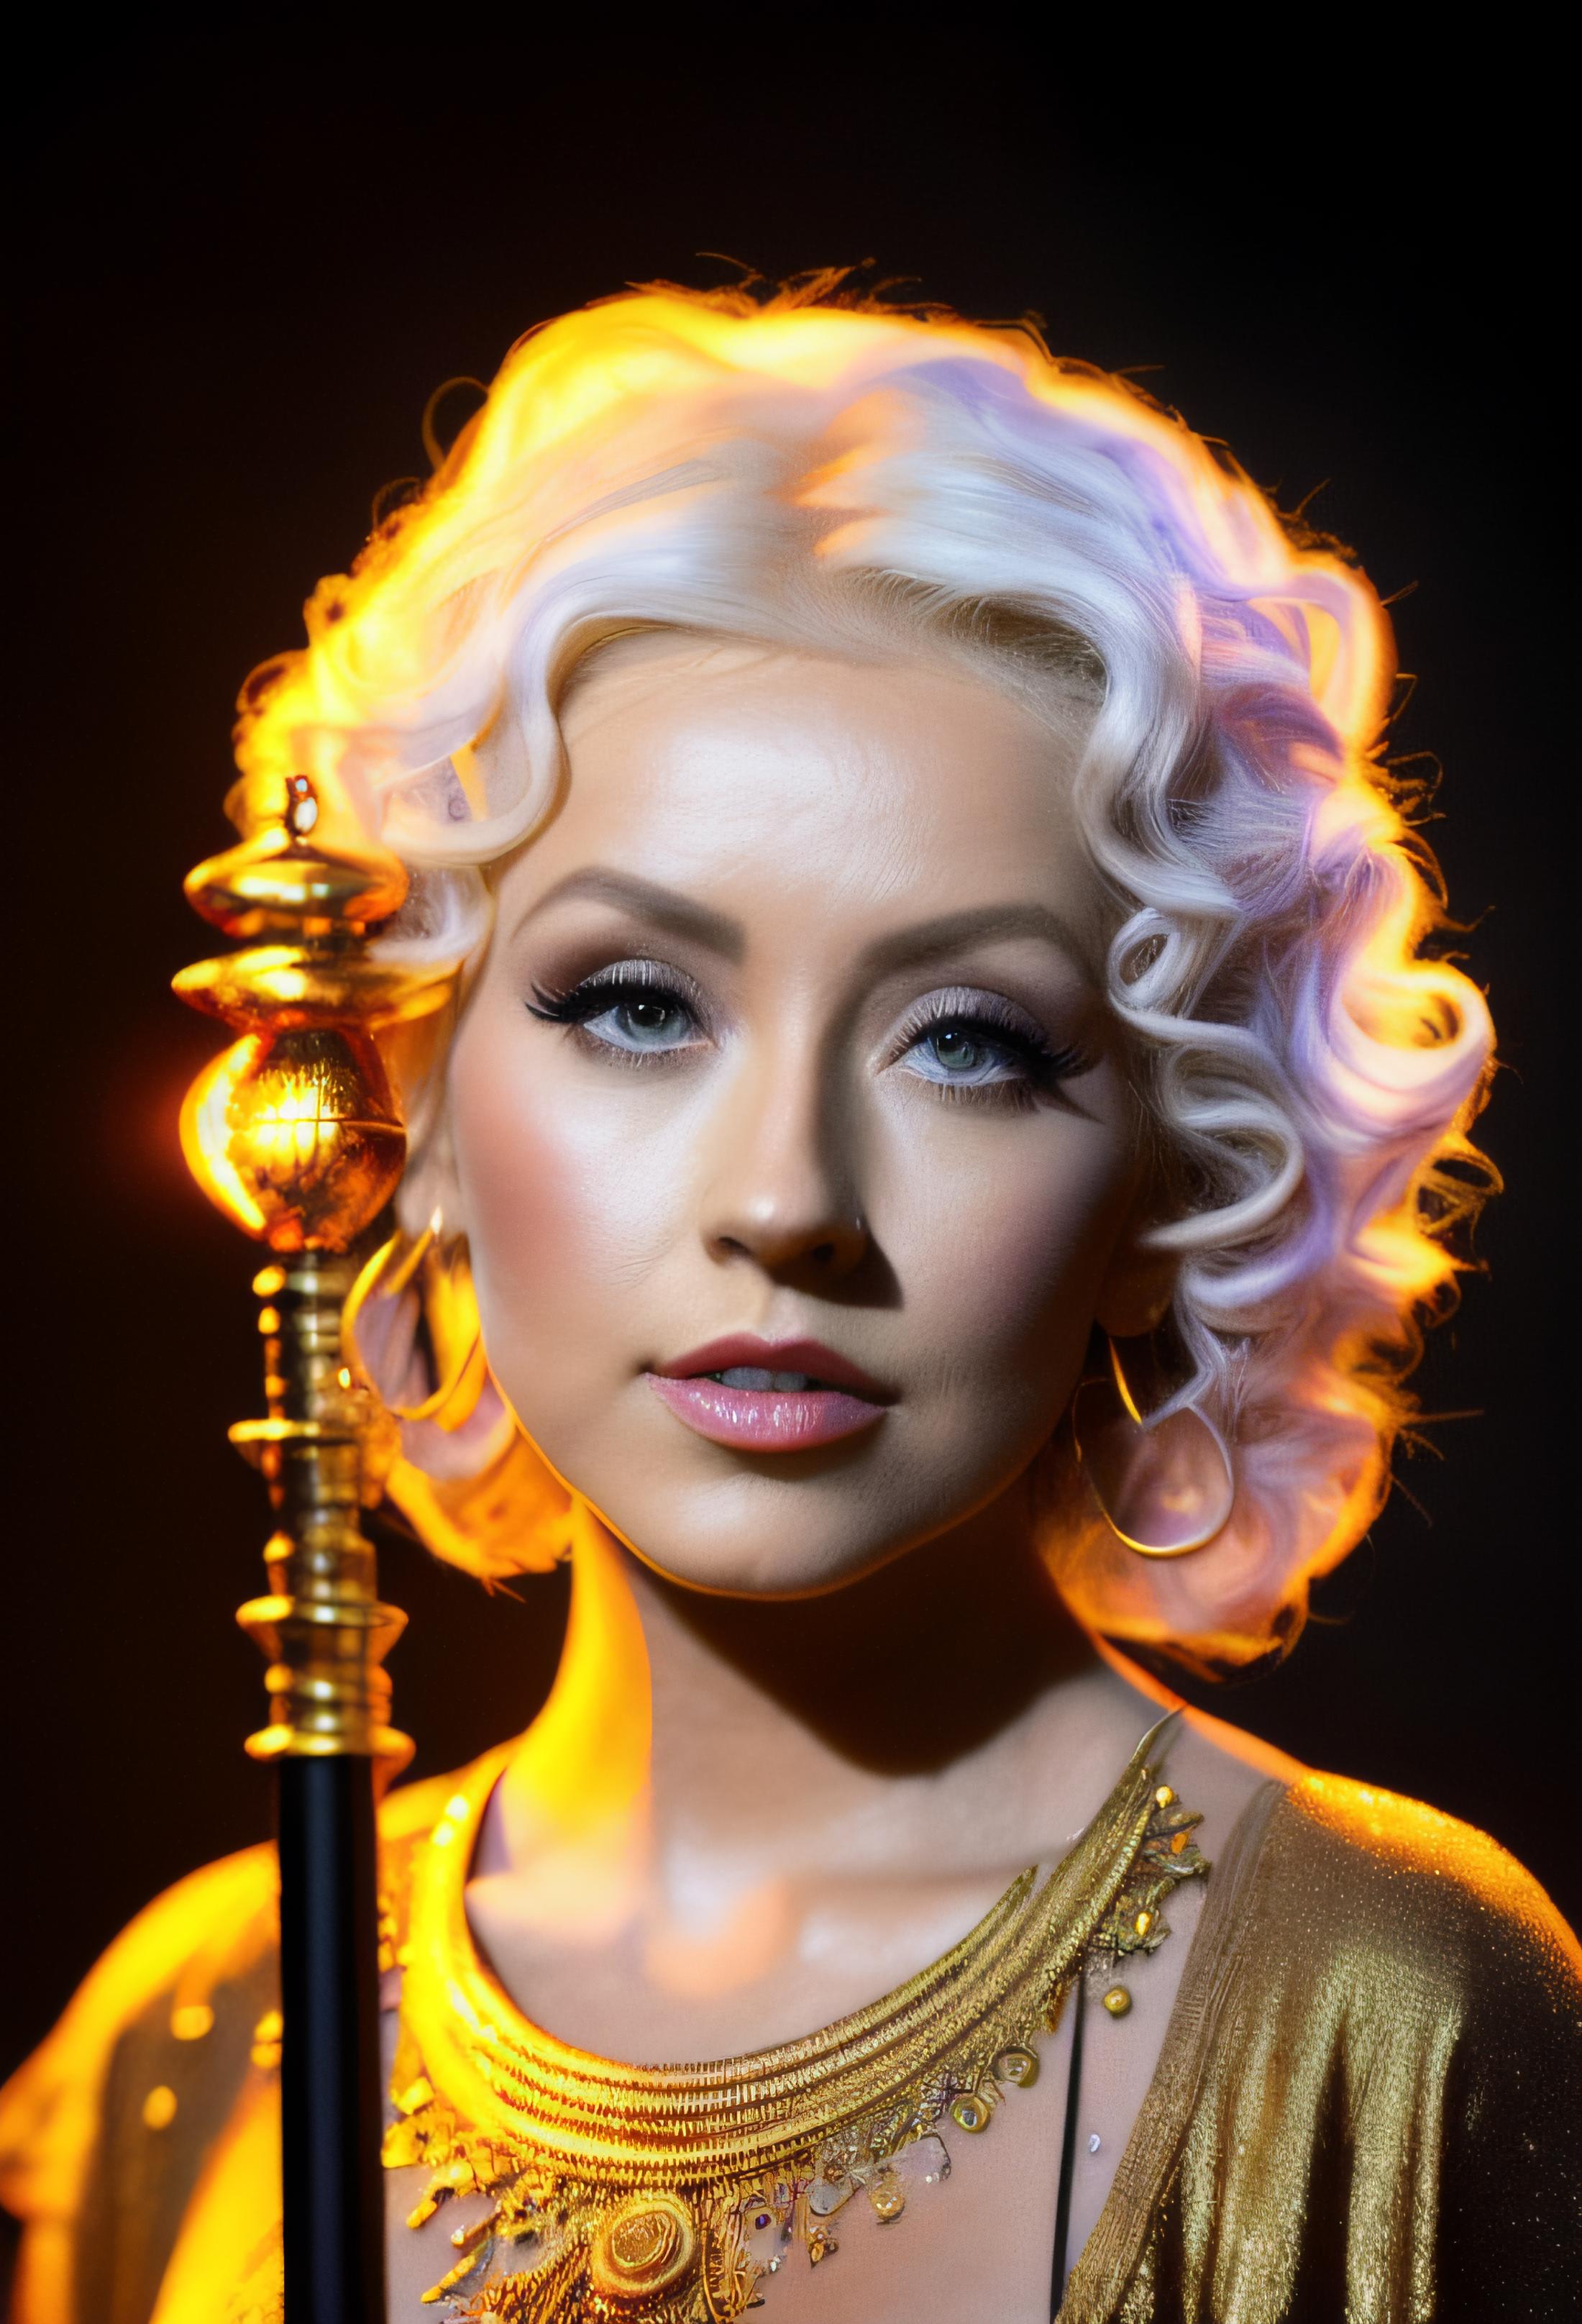 Christina Aguilera image by frankyfrank2k